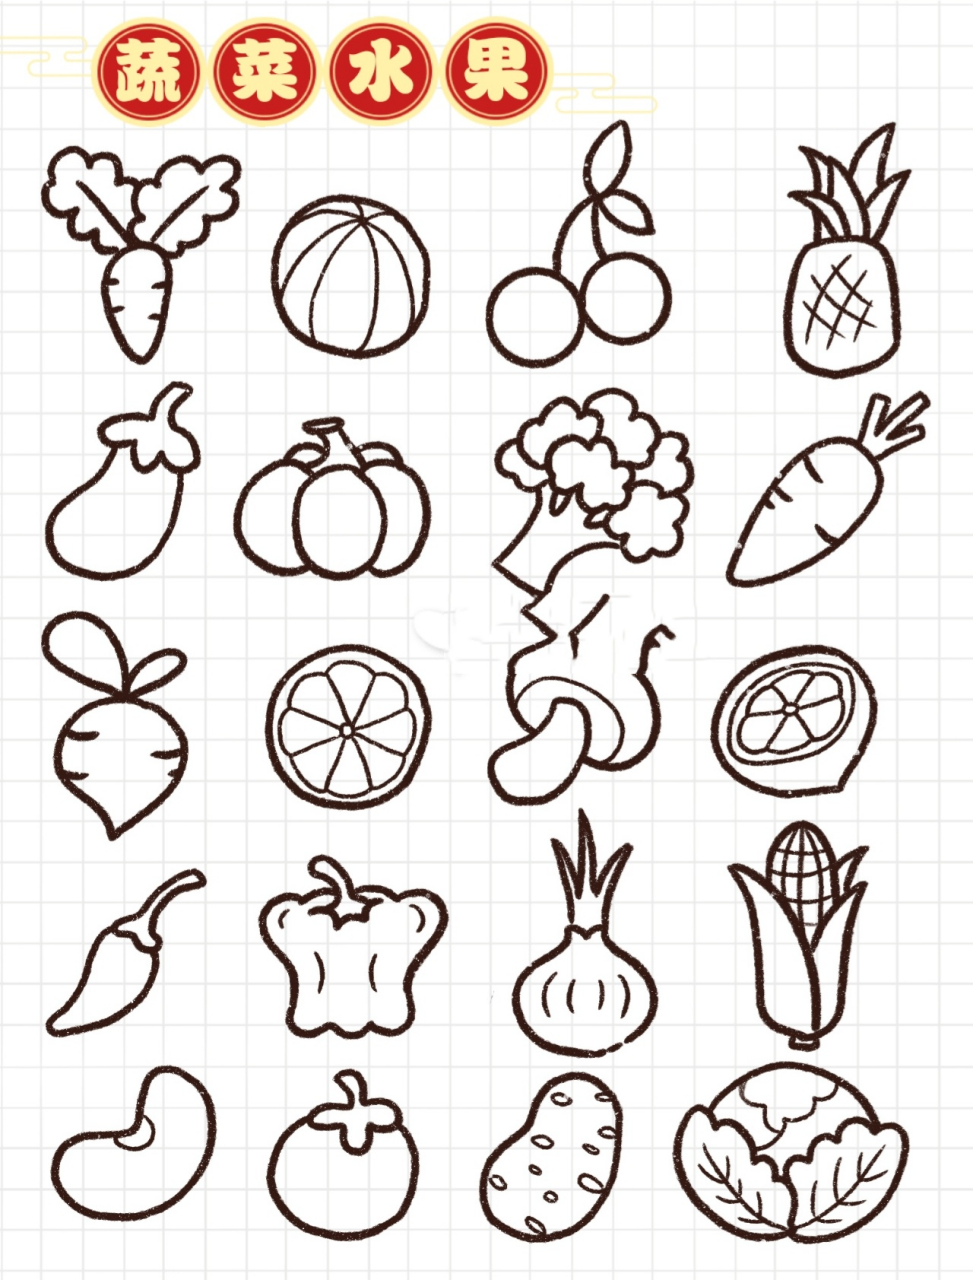 vegetables简笔画图片